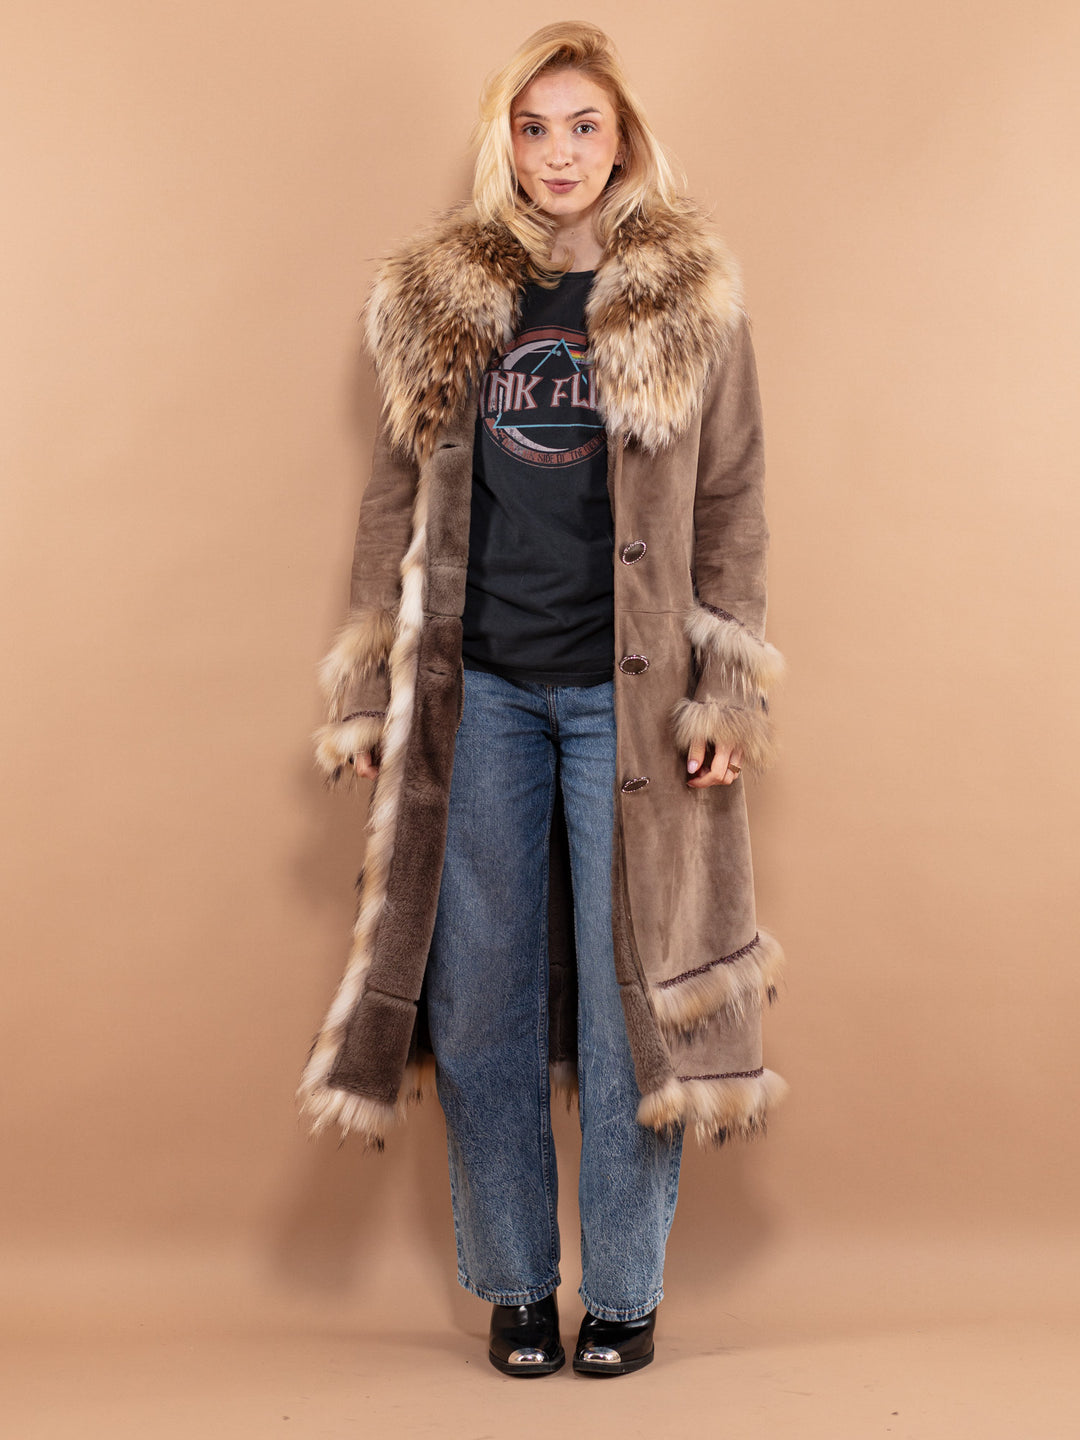 Penny Lane Coat 90's, Size XS Beige Shearling Fur Coat, Elegant Fur Coat, Penny Lane Coat, Almost Famous, Retro Chic, Vintage Fur Coat